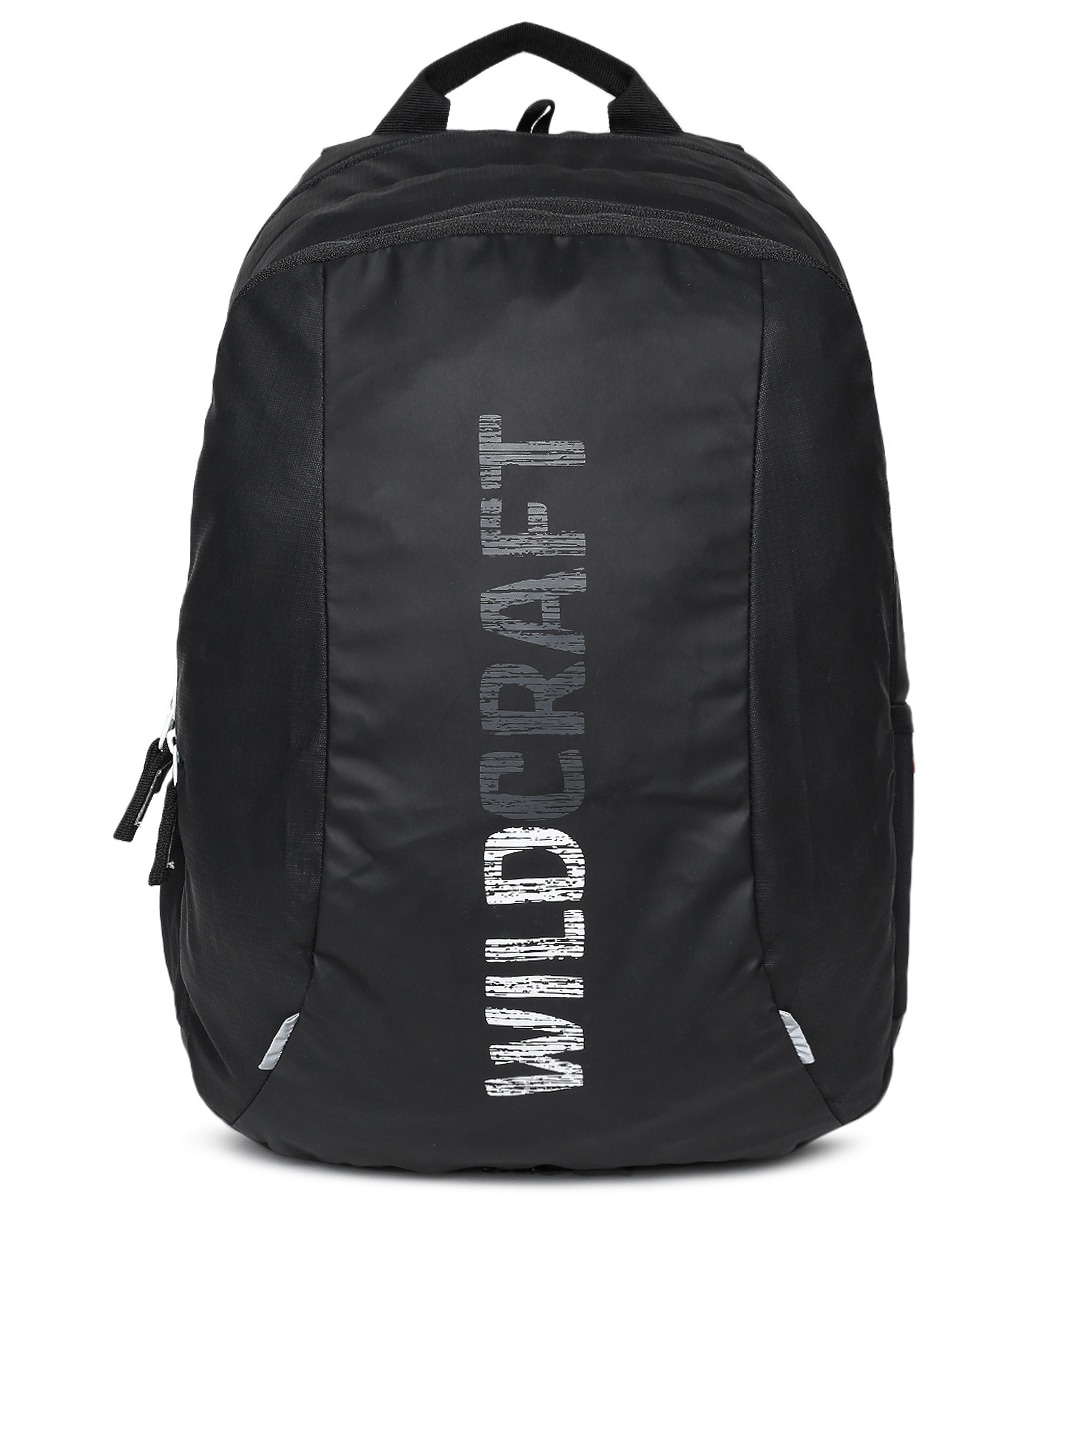 Wildcraft Unisex Black Ambit Typography Backpack Price in India